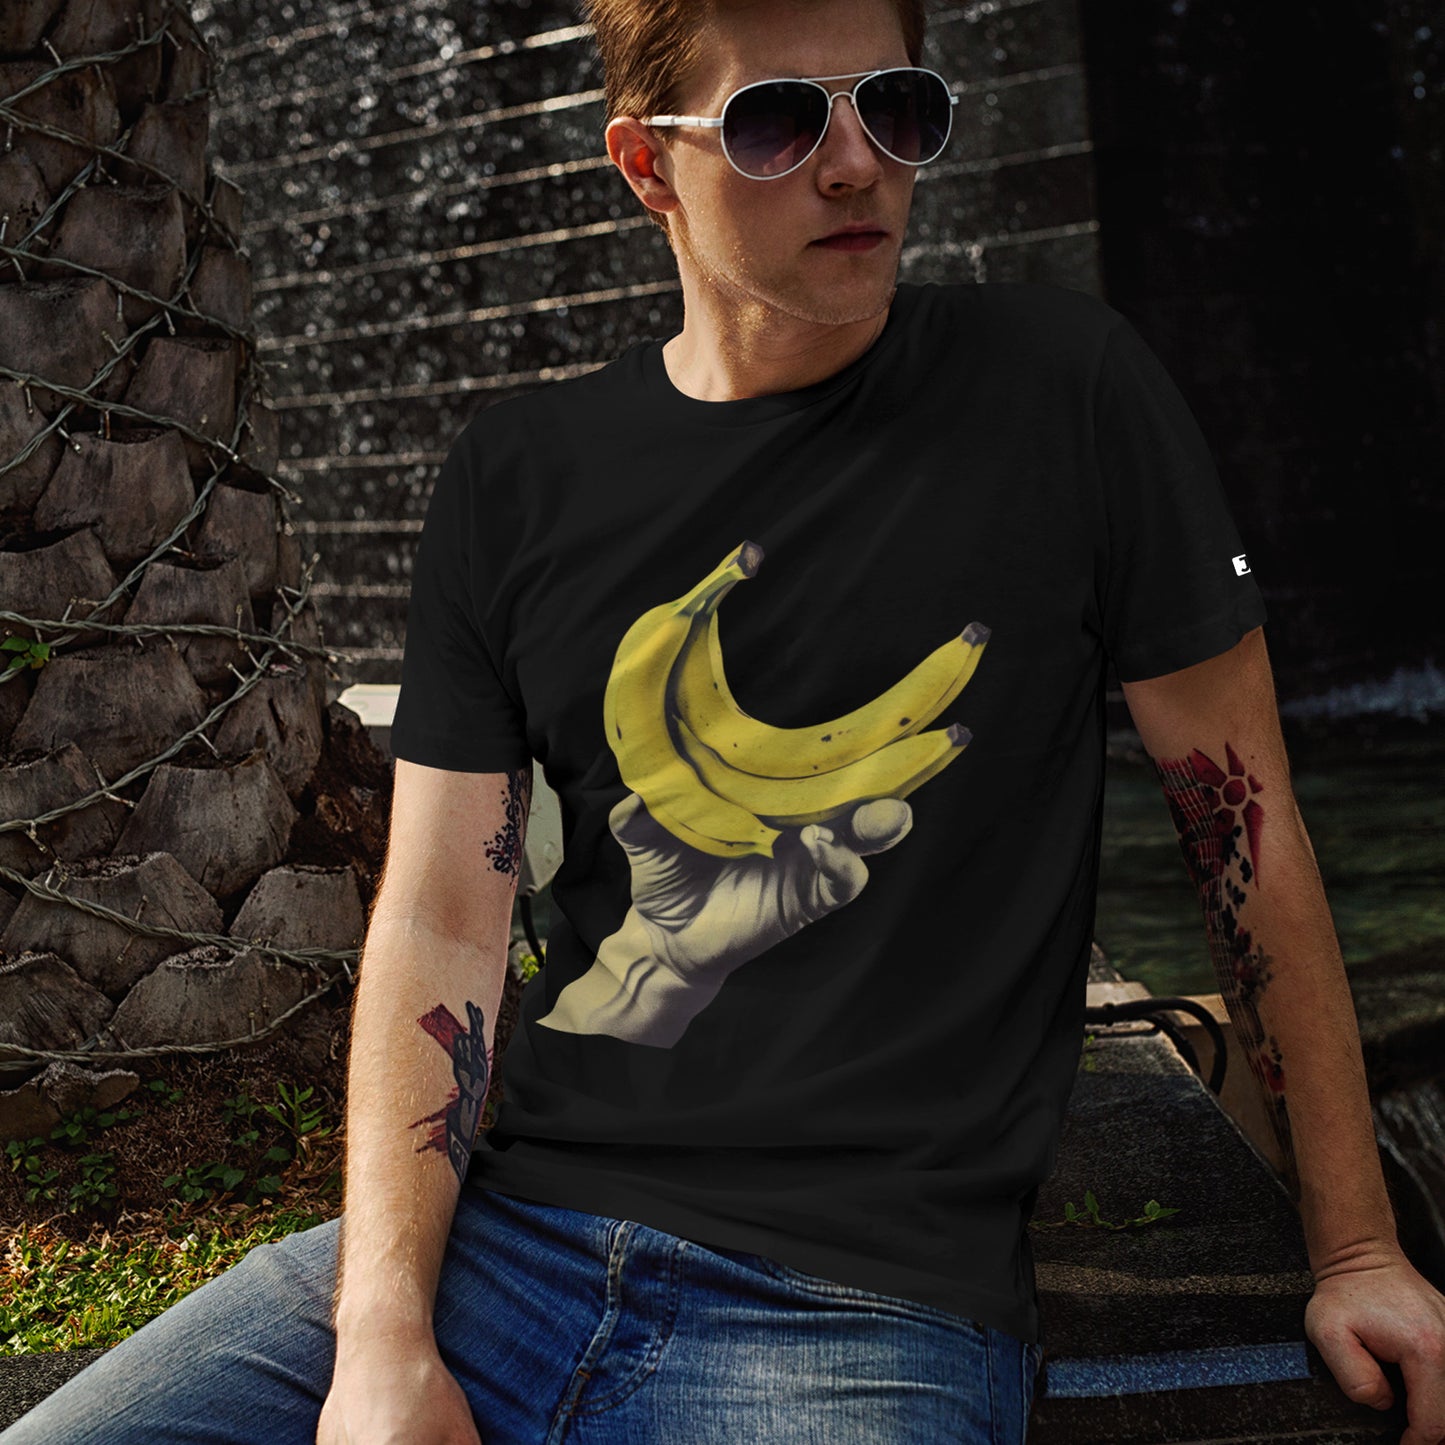 Unisex "Estado Banenero" T-Shirt - Male model outdoors, sitting, wearing sunglasses, in black color.